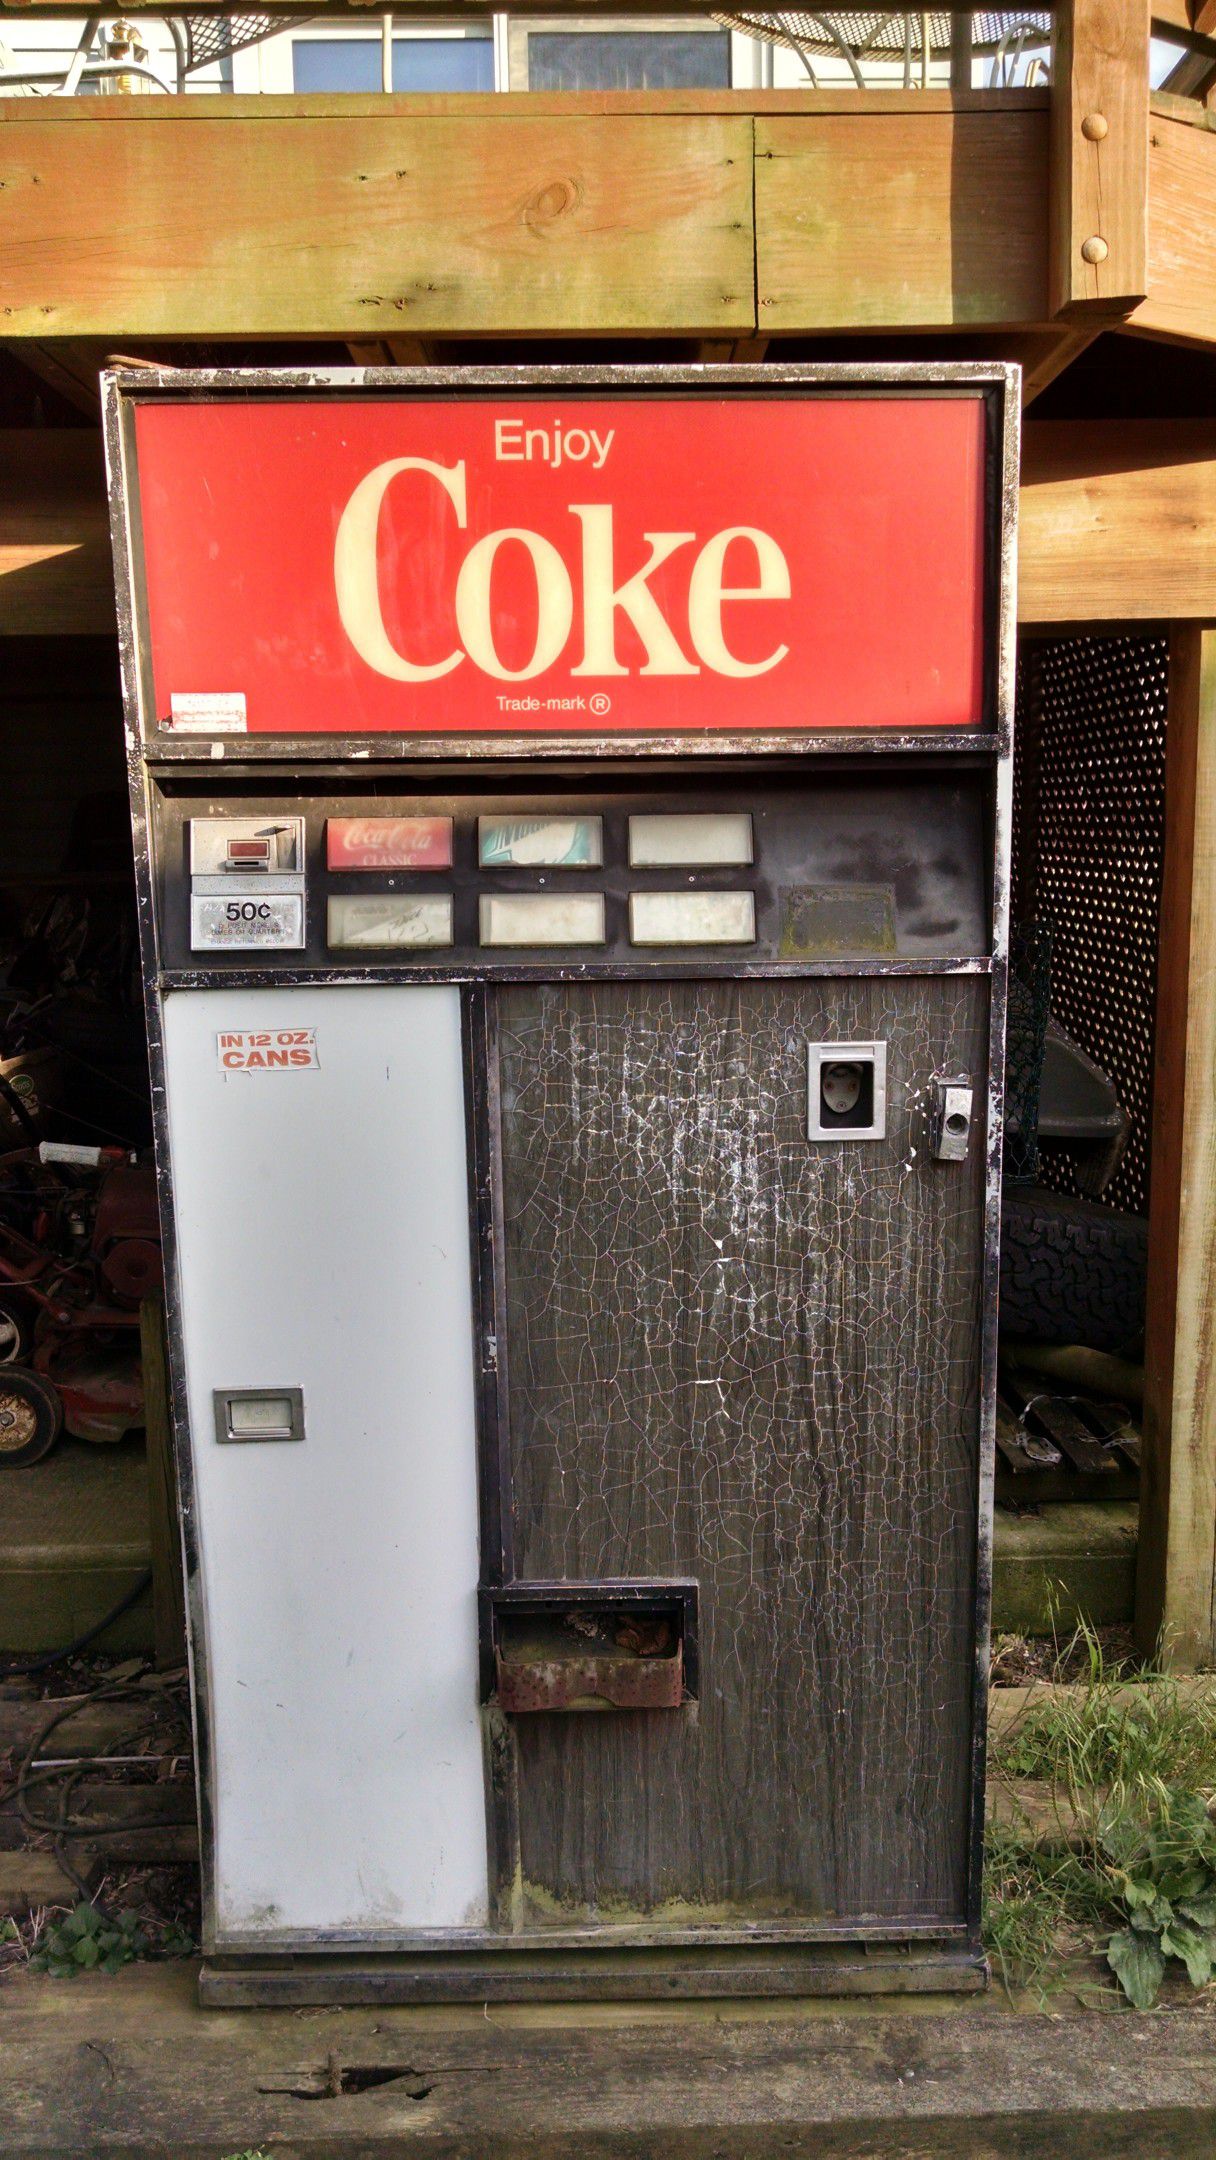 Full size Coke machine